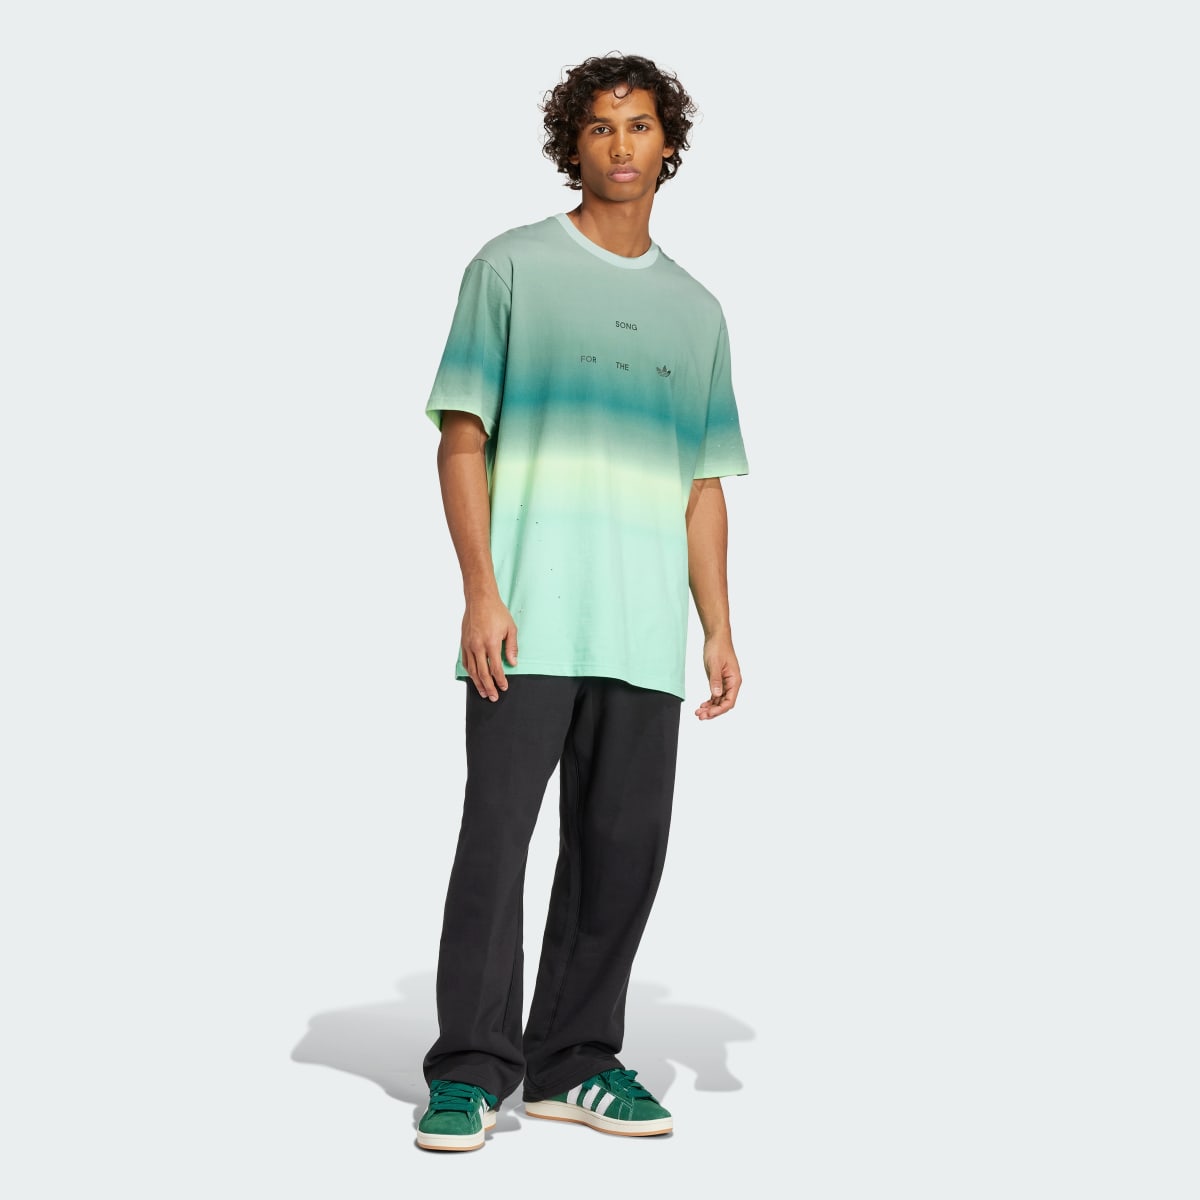 Adidas SFTM T-Shirt – Genderneutral. 4